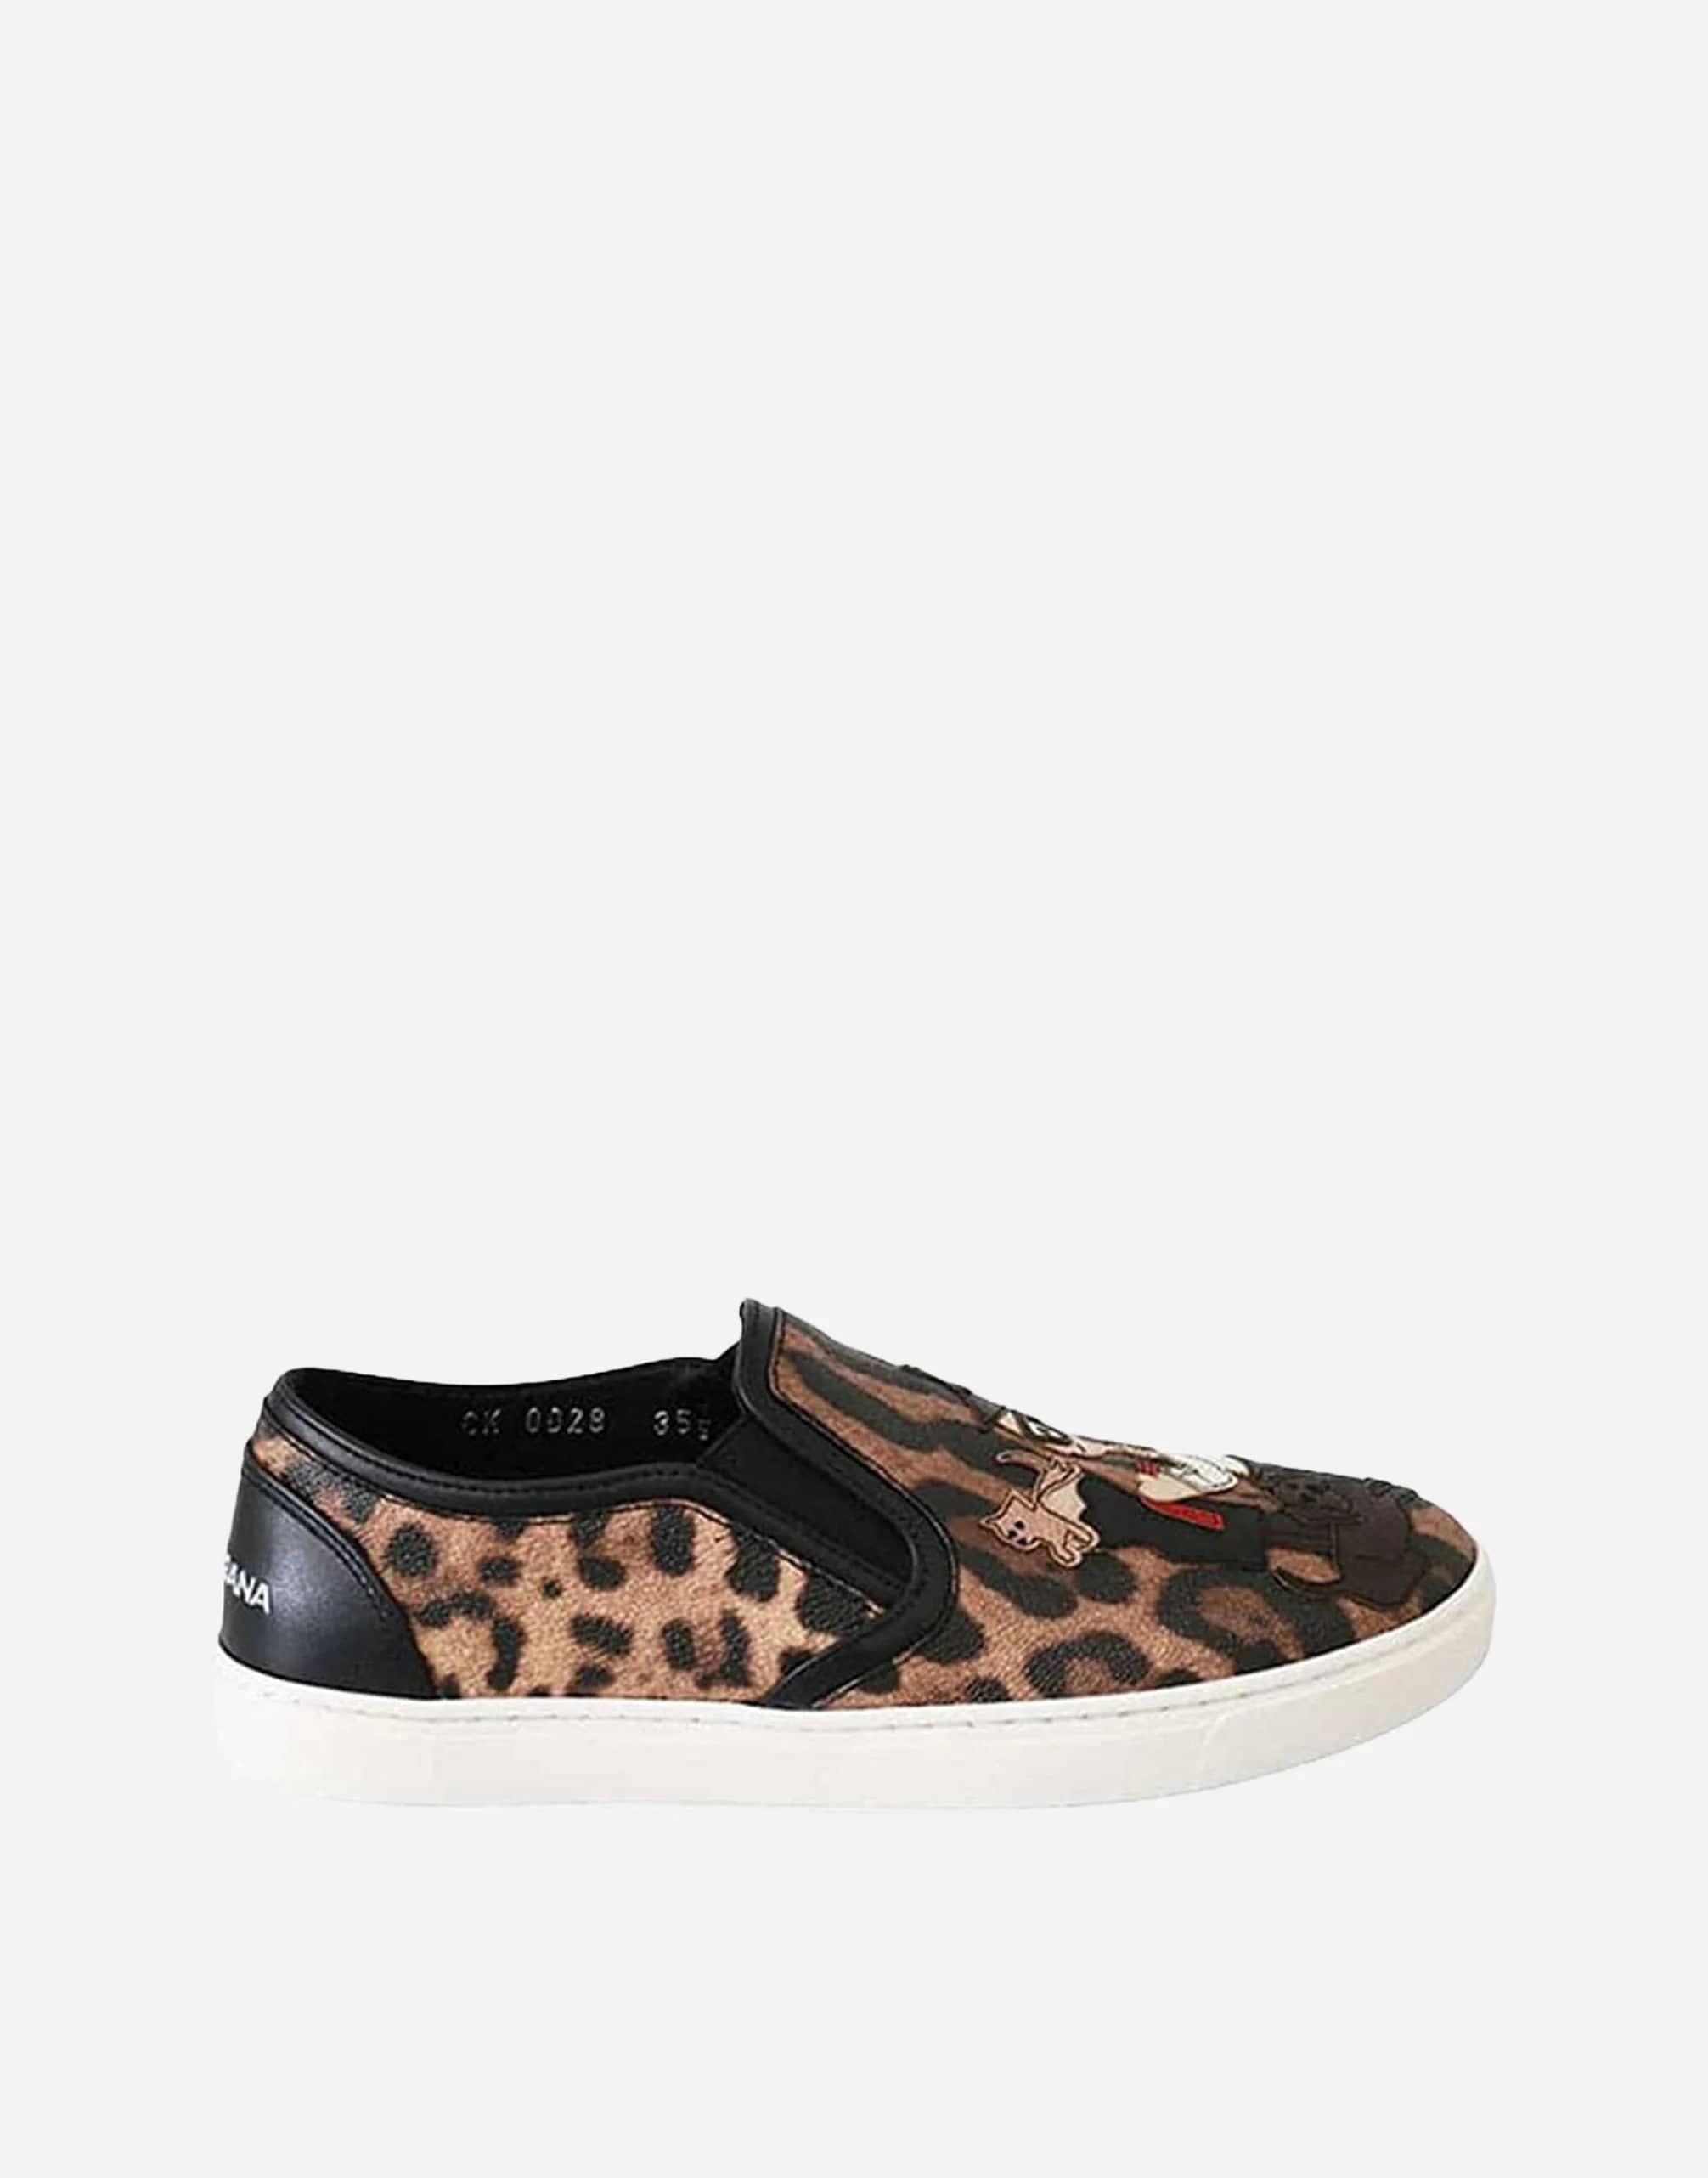 Dolce & Gabbana Leopard-Print Sneakers